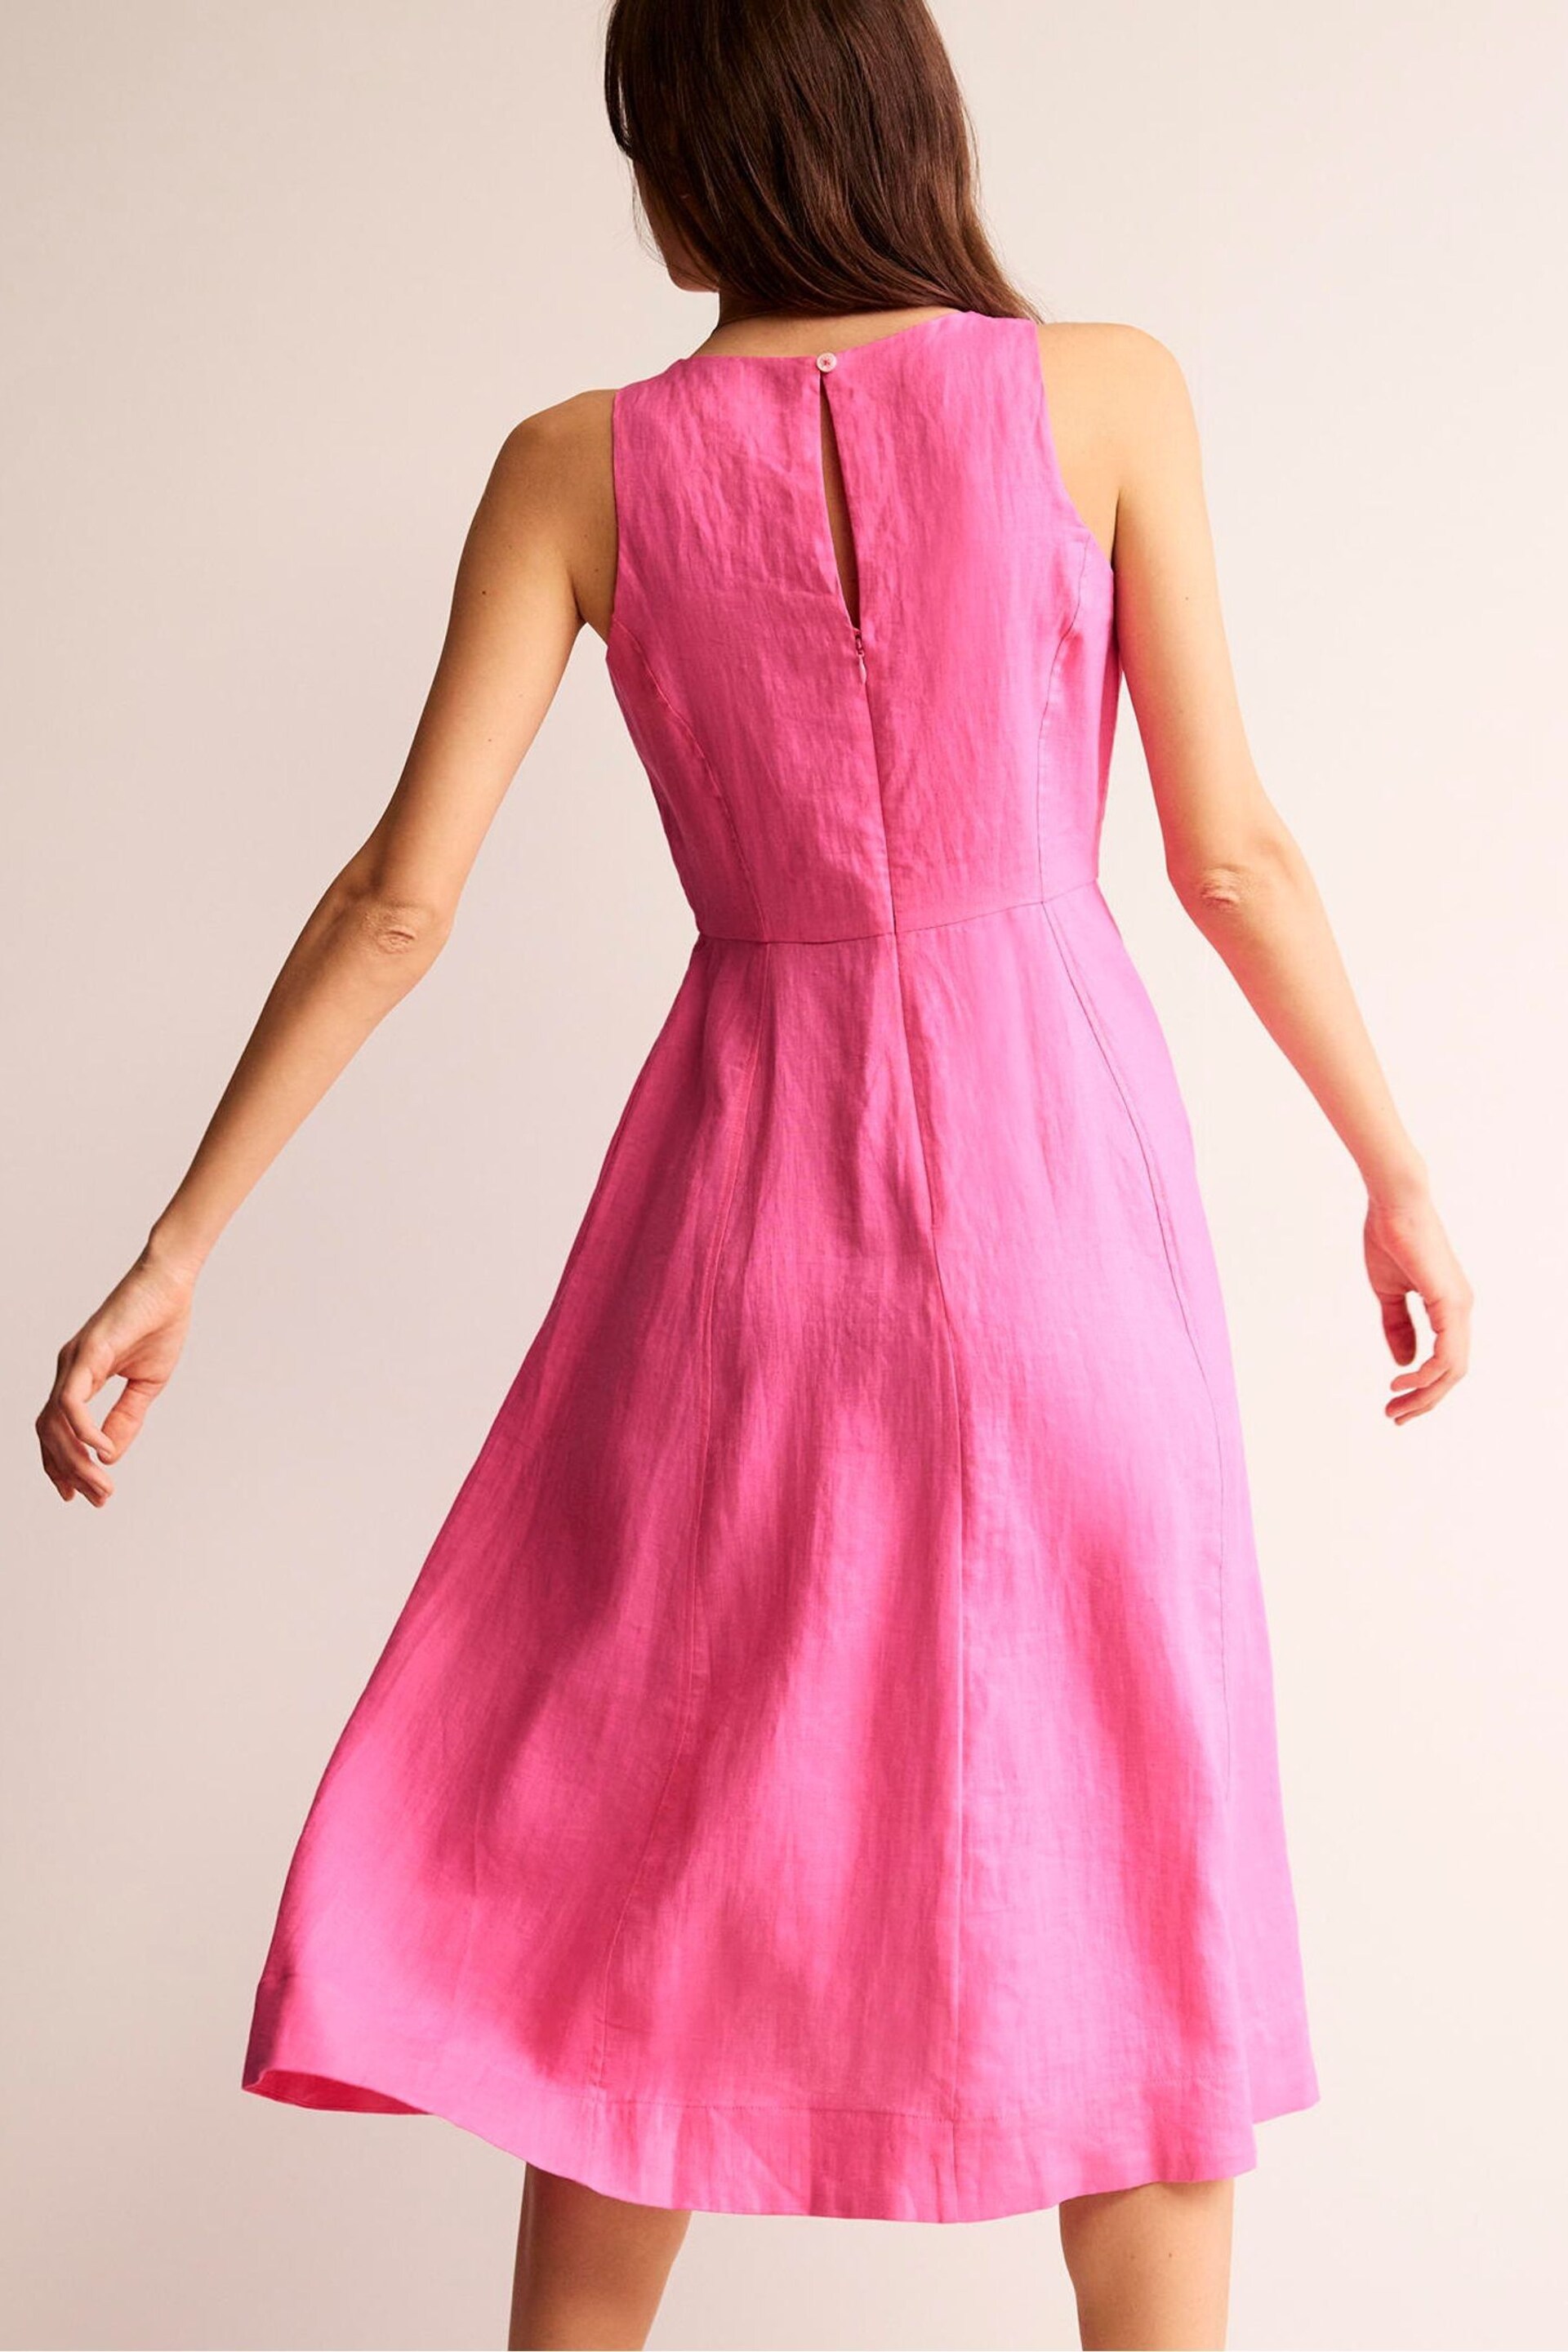 Boden Pink Carla Linen Midi Dress - Image 3 of 5